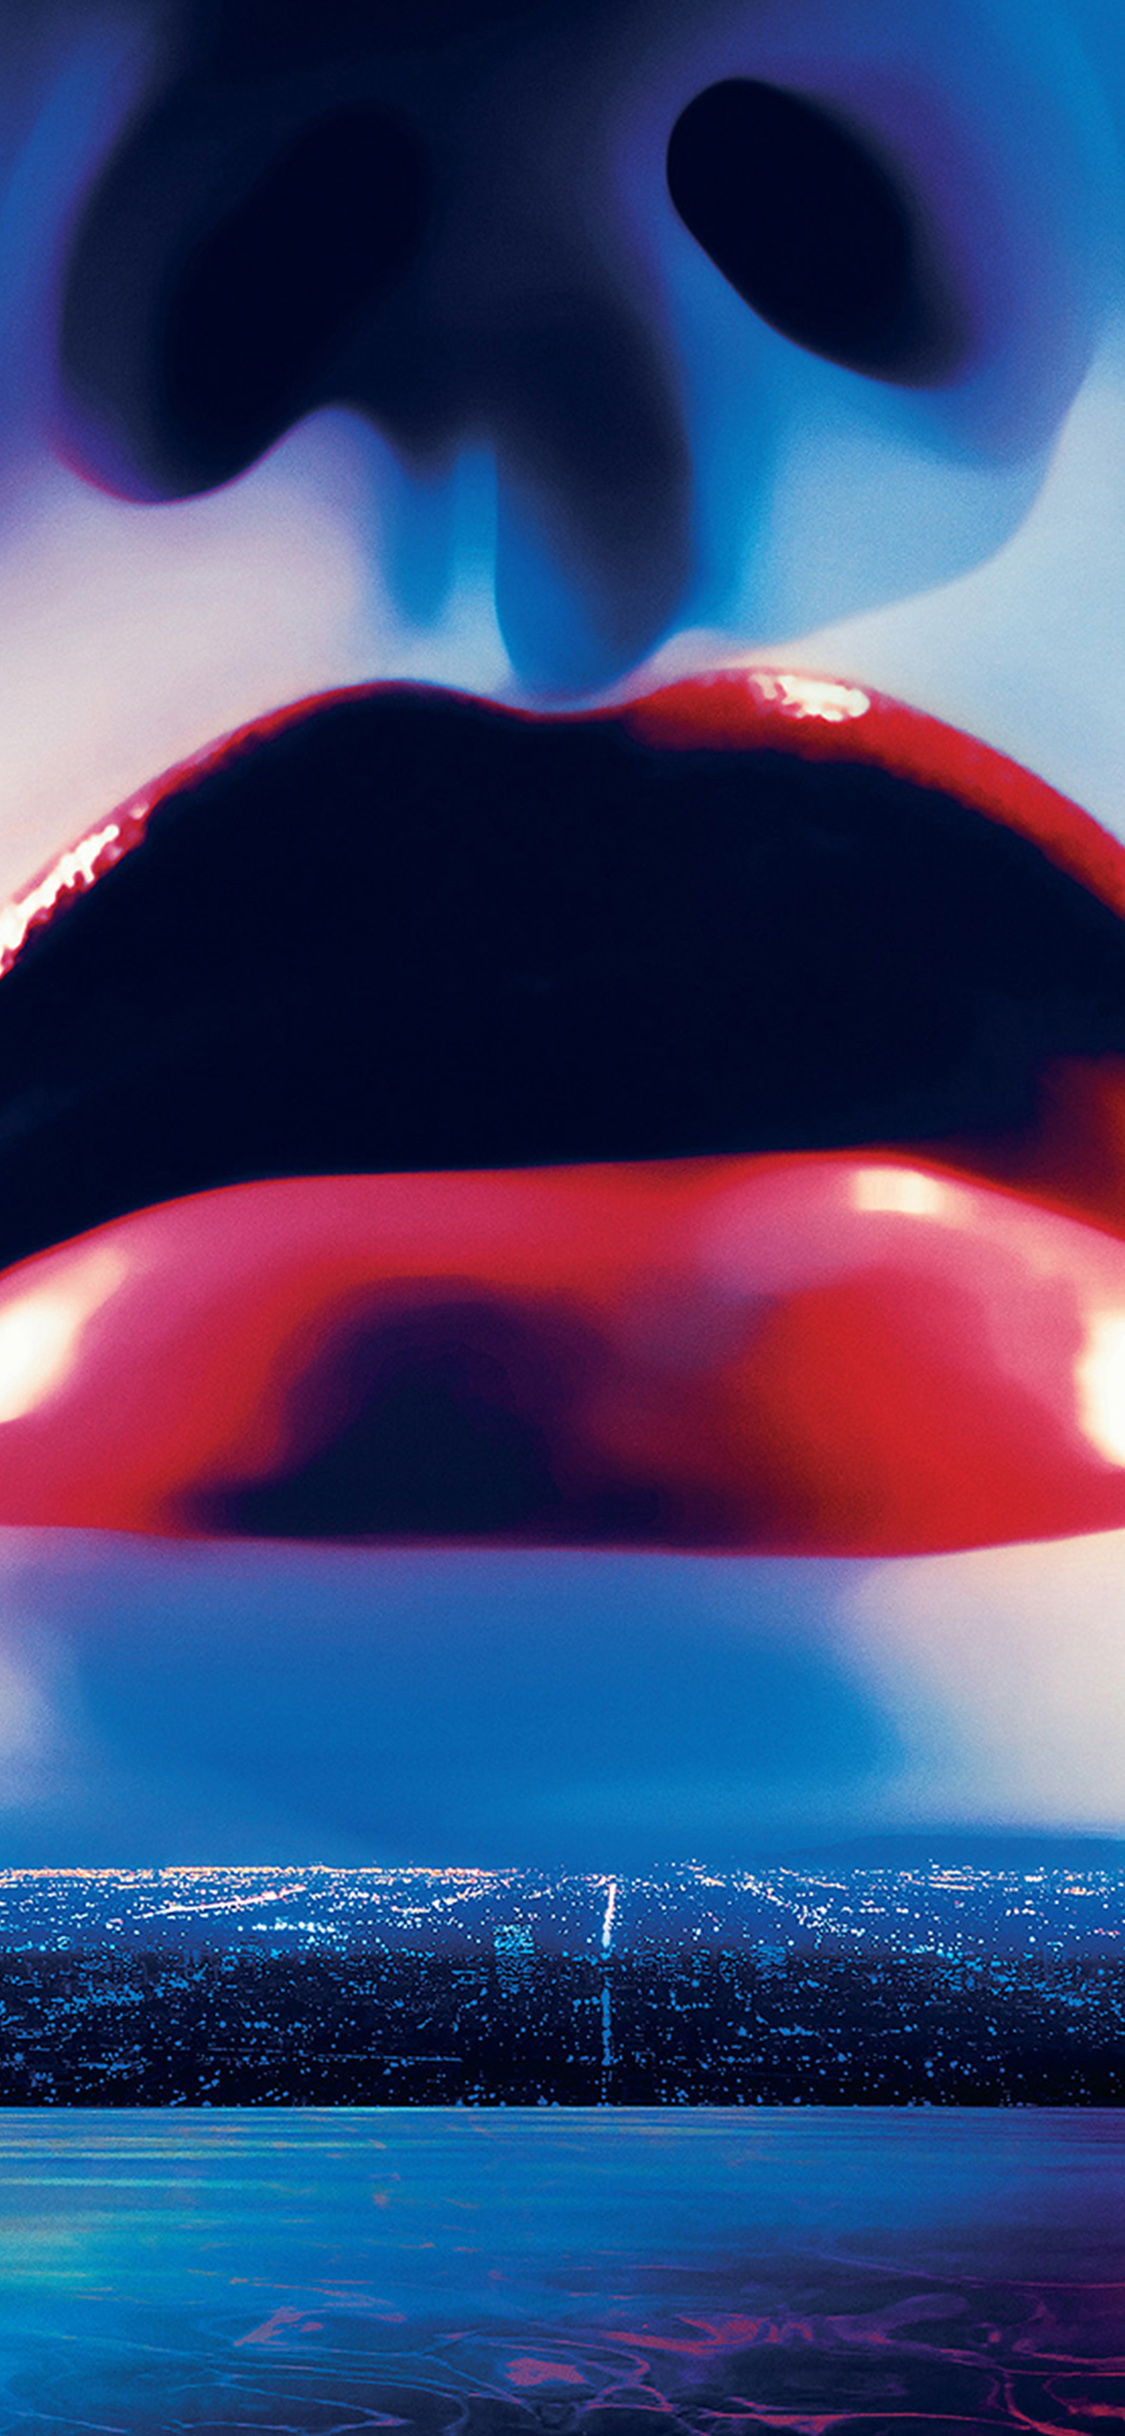 iPhone X wallpaper. lips poster film neon demon red blue art illustration